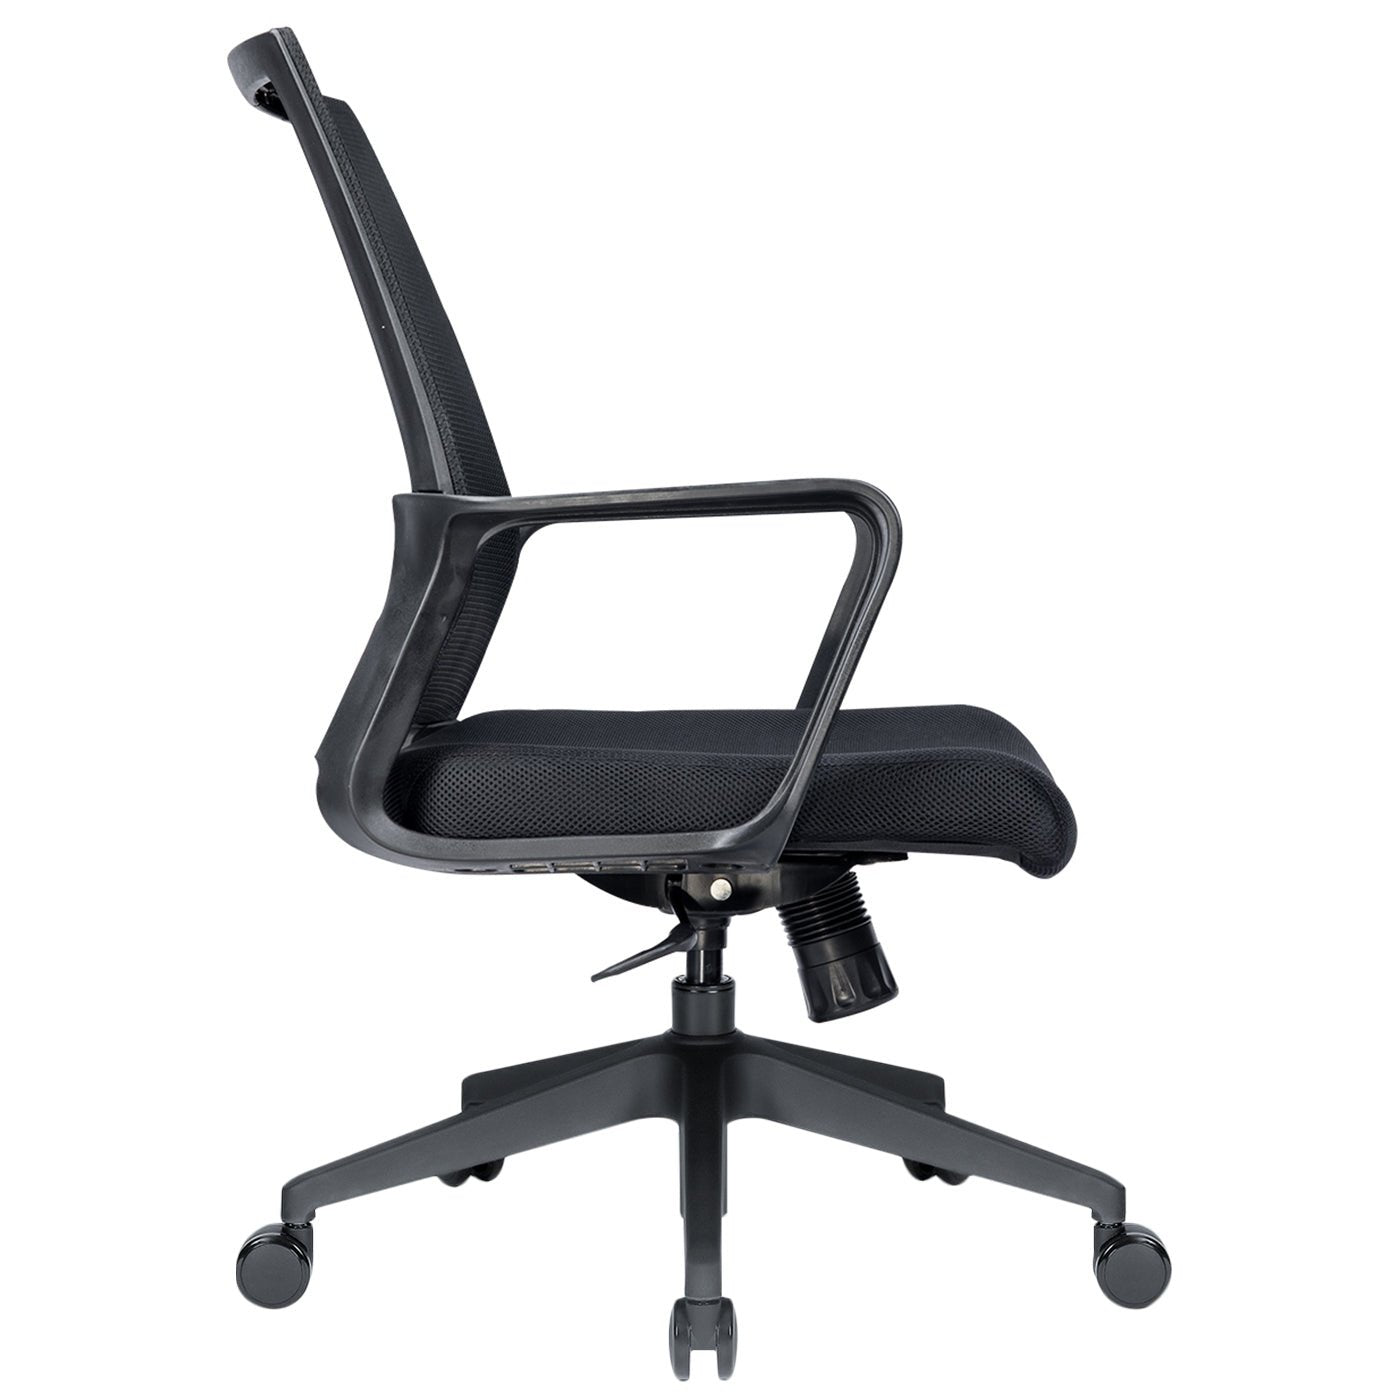 Punch Luxury Medium Back Chair FC